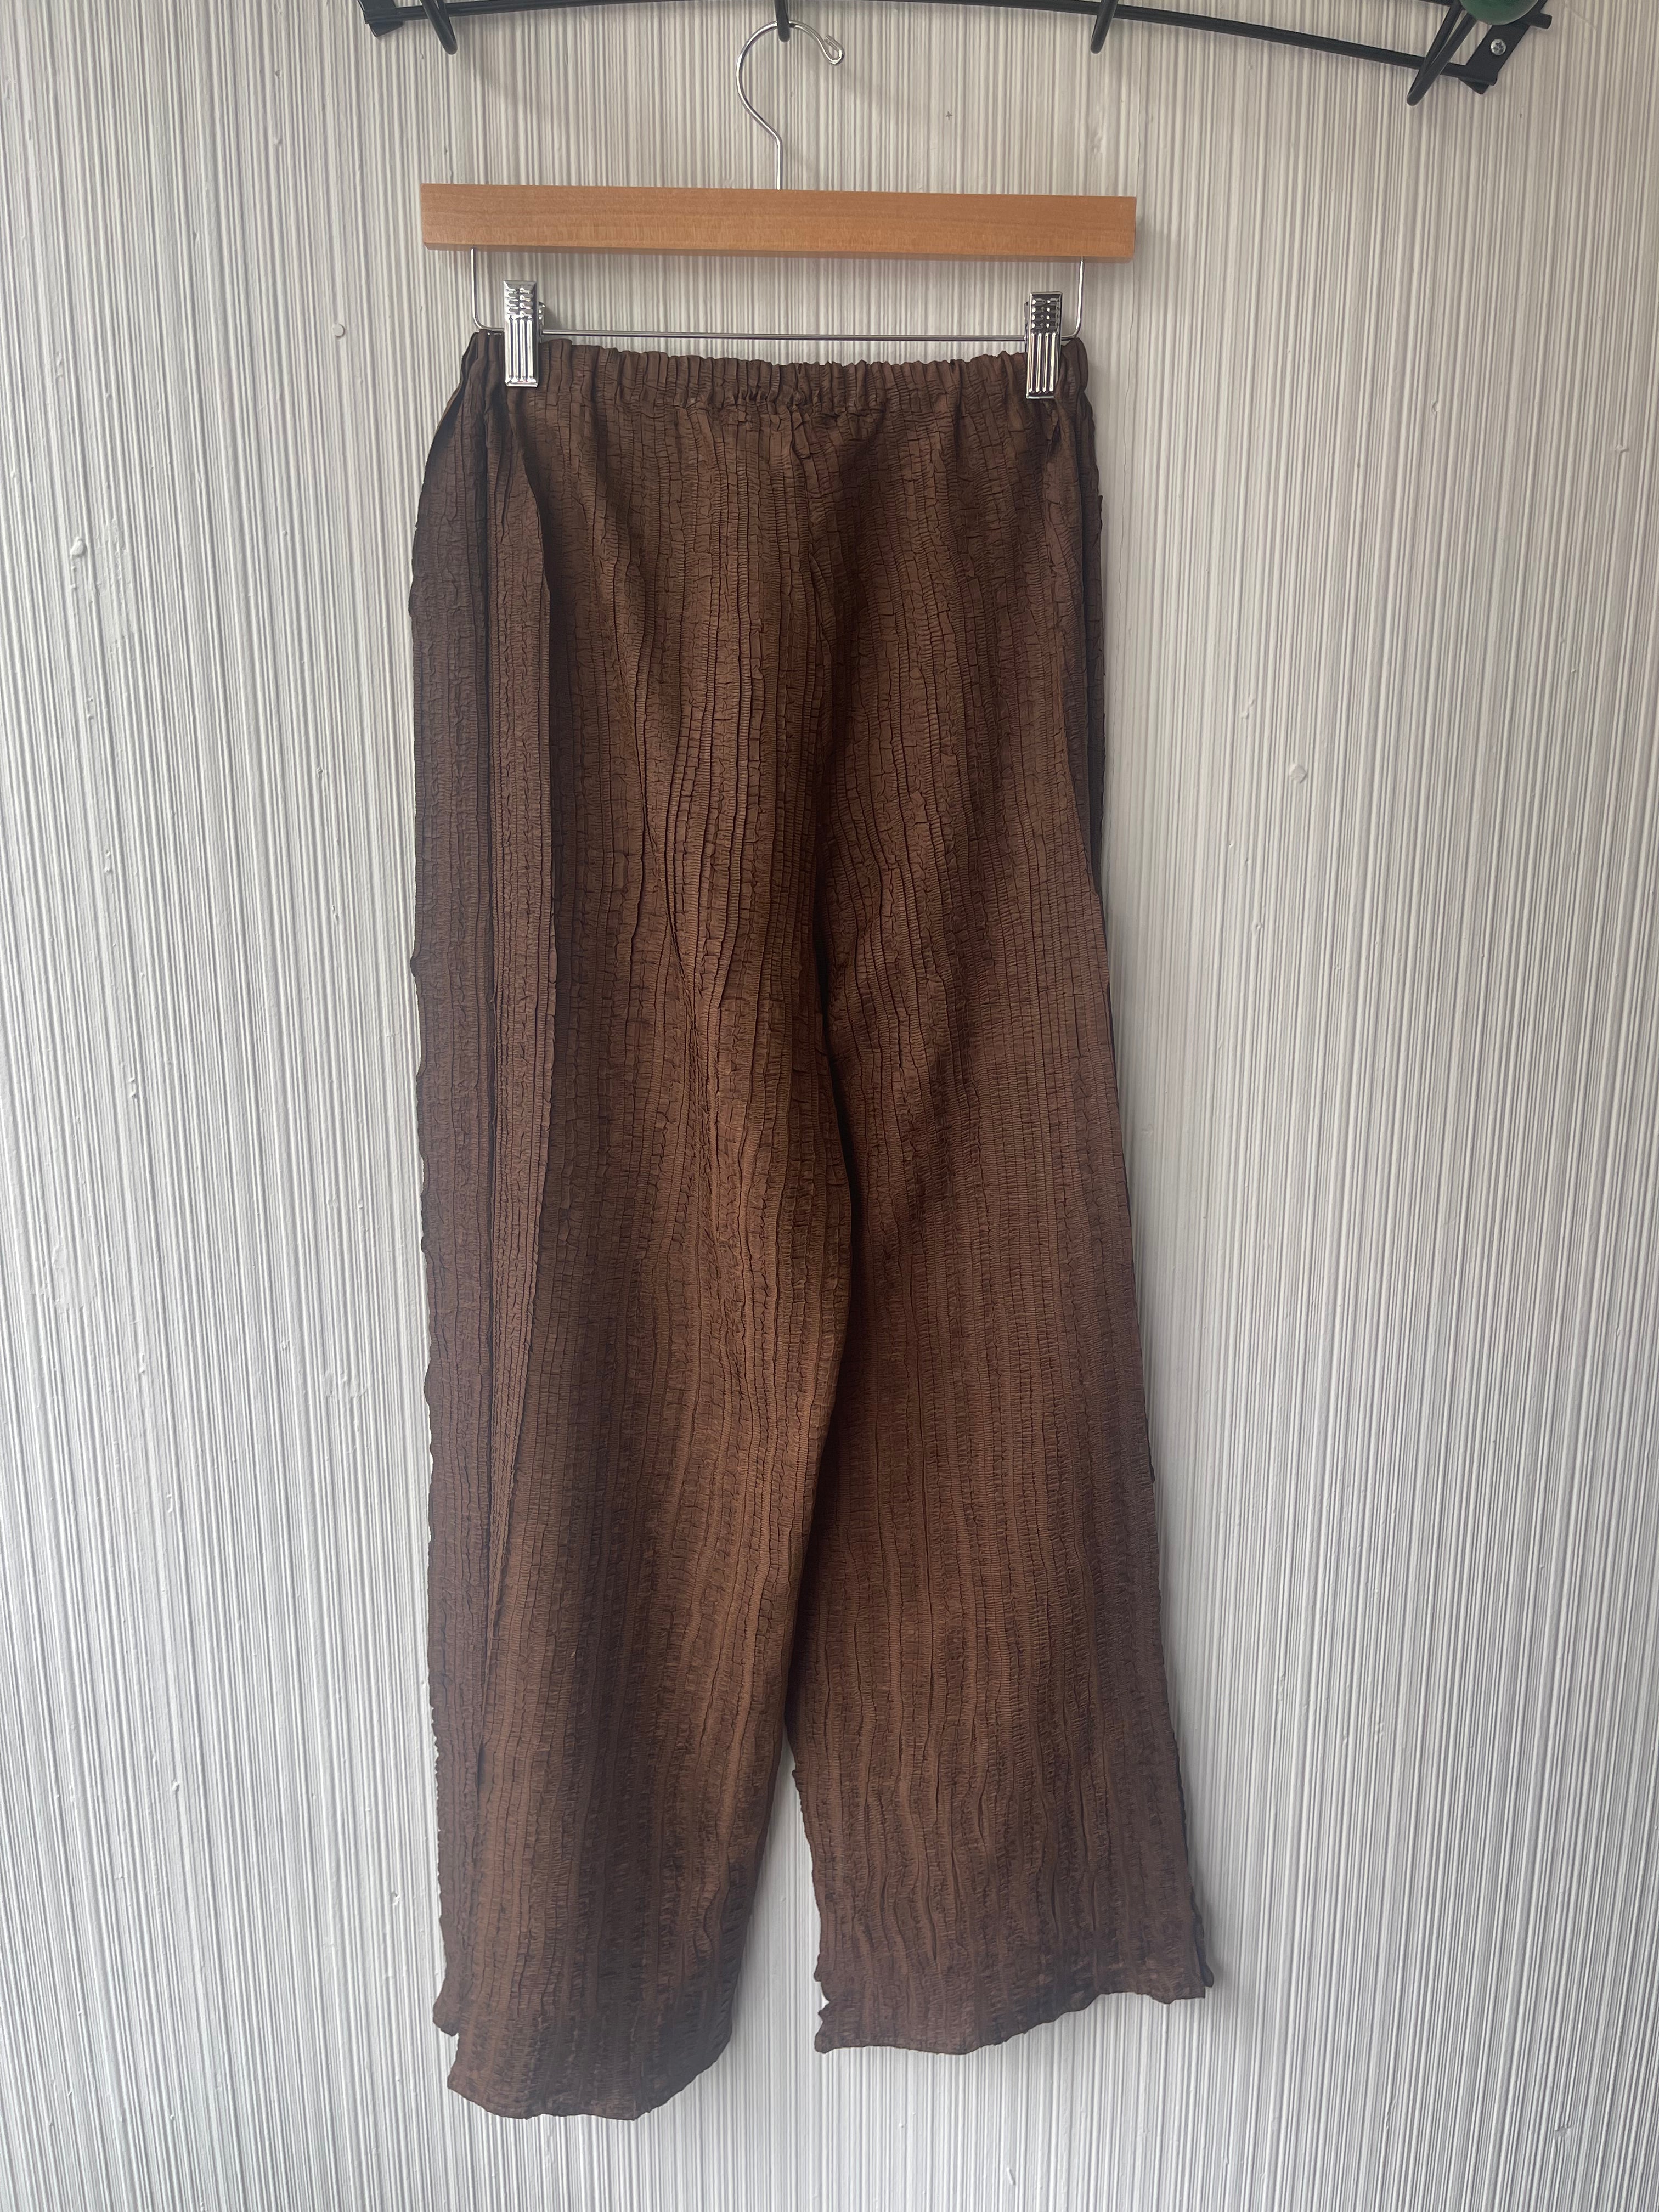 Issey Miyake bronze pleated flare pants